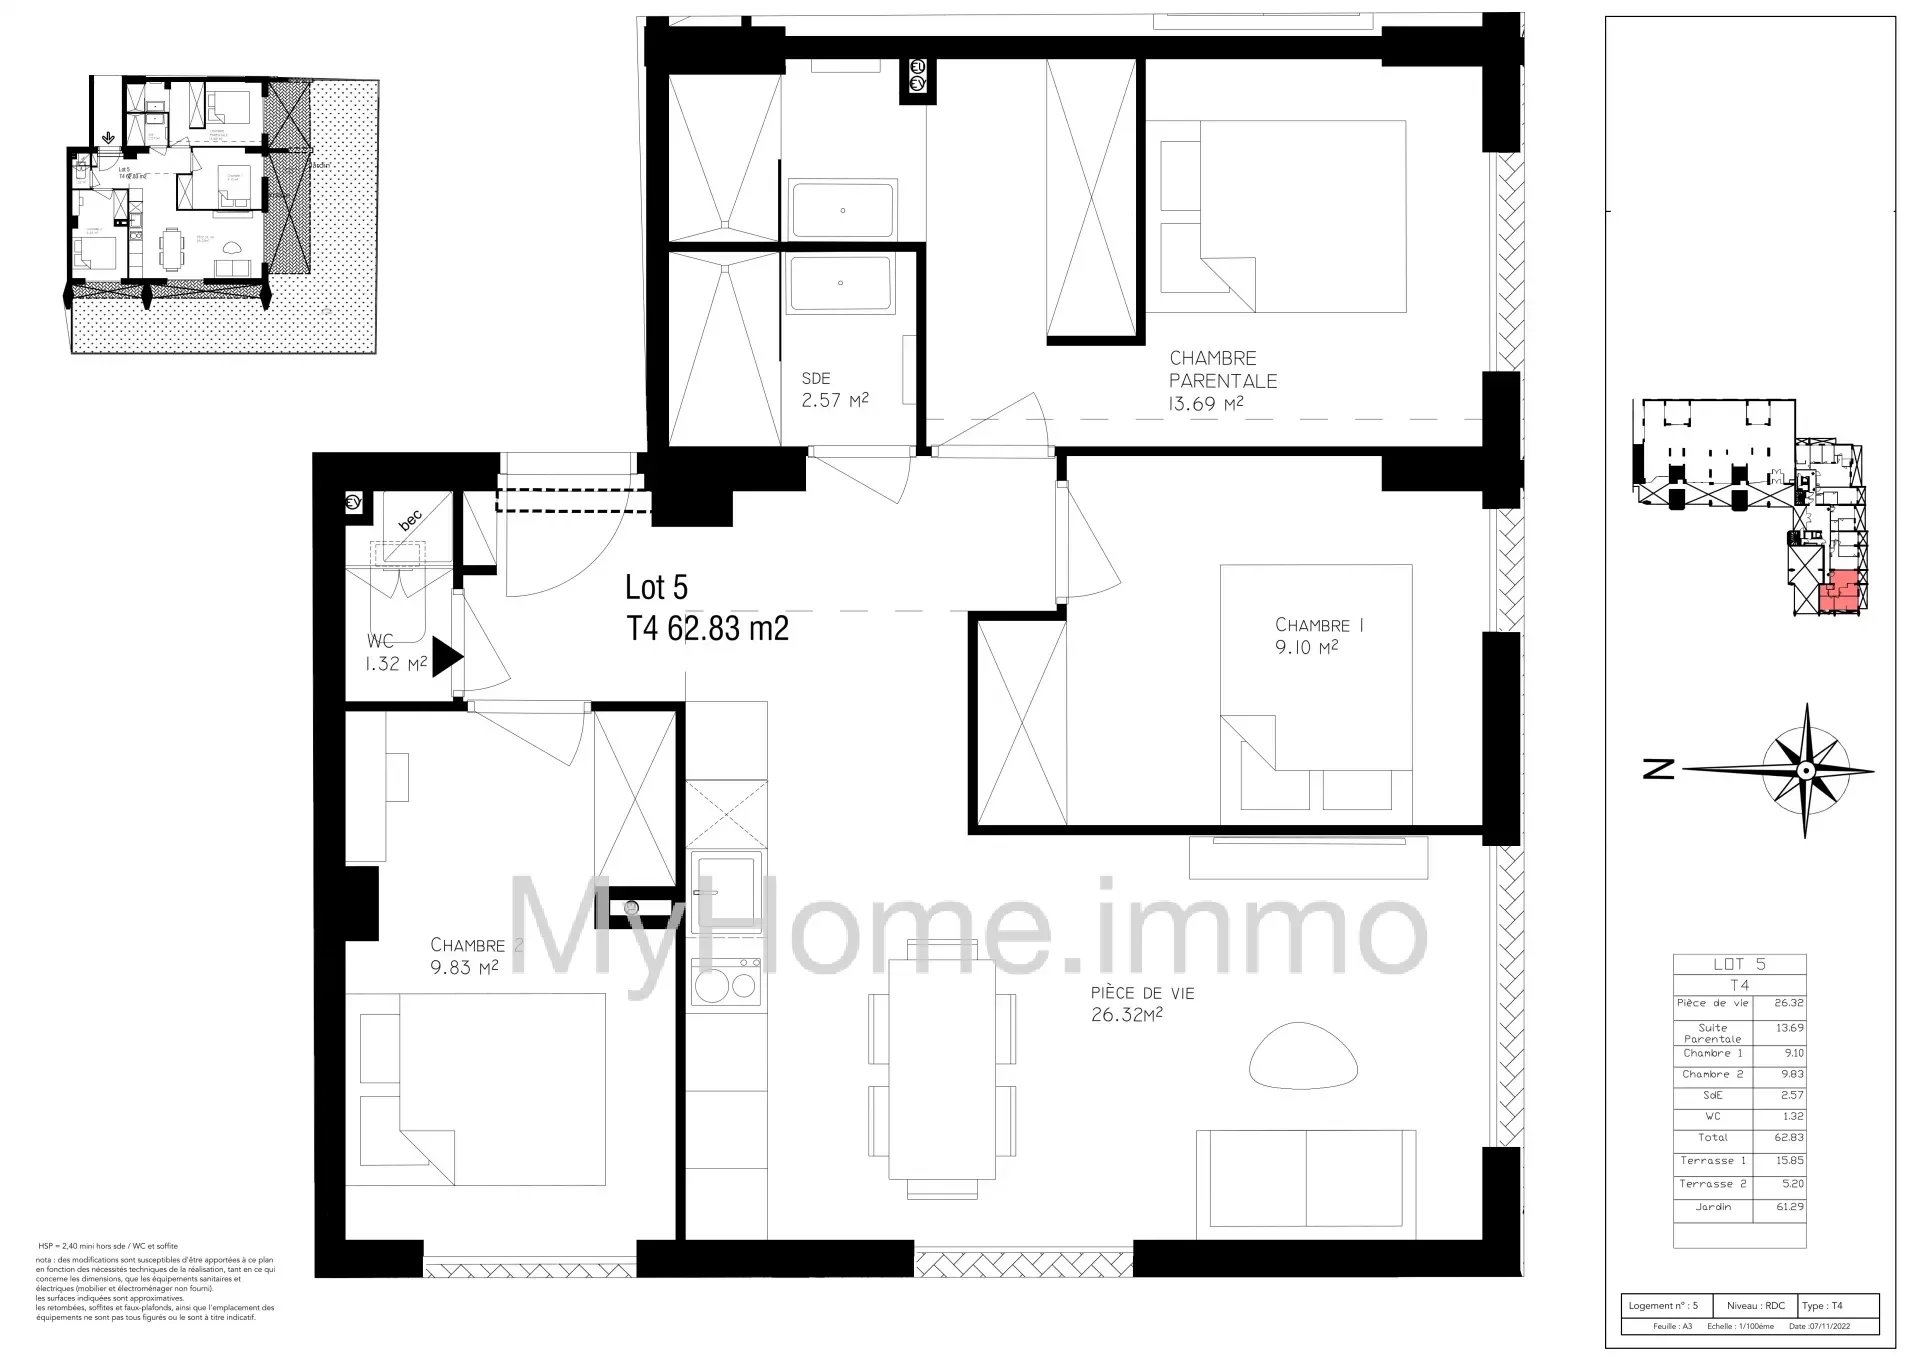 Vente Appartement 63m² 4 Pièces à Nice (06100) - Myhome.Immo